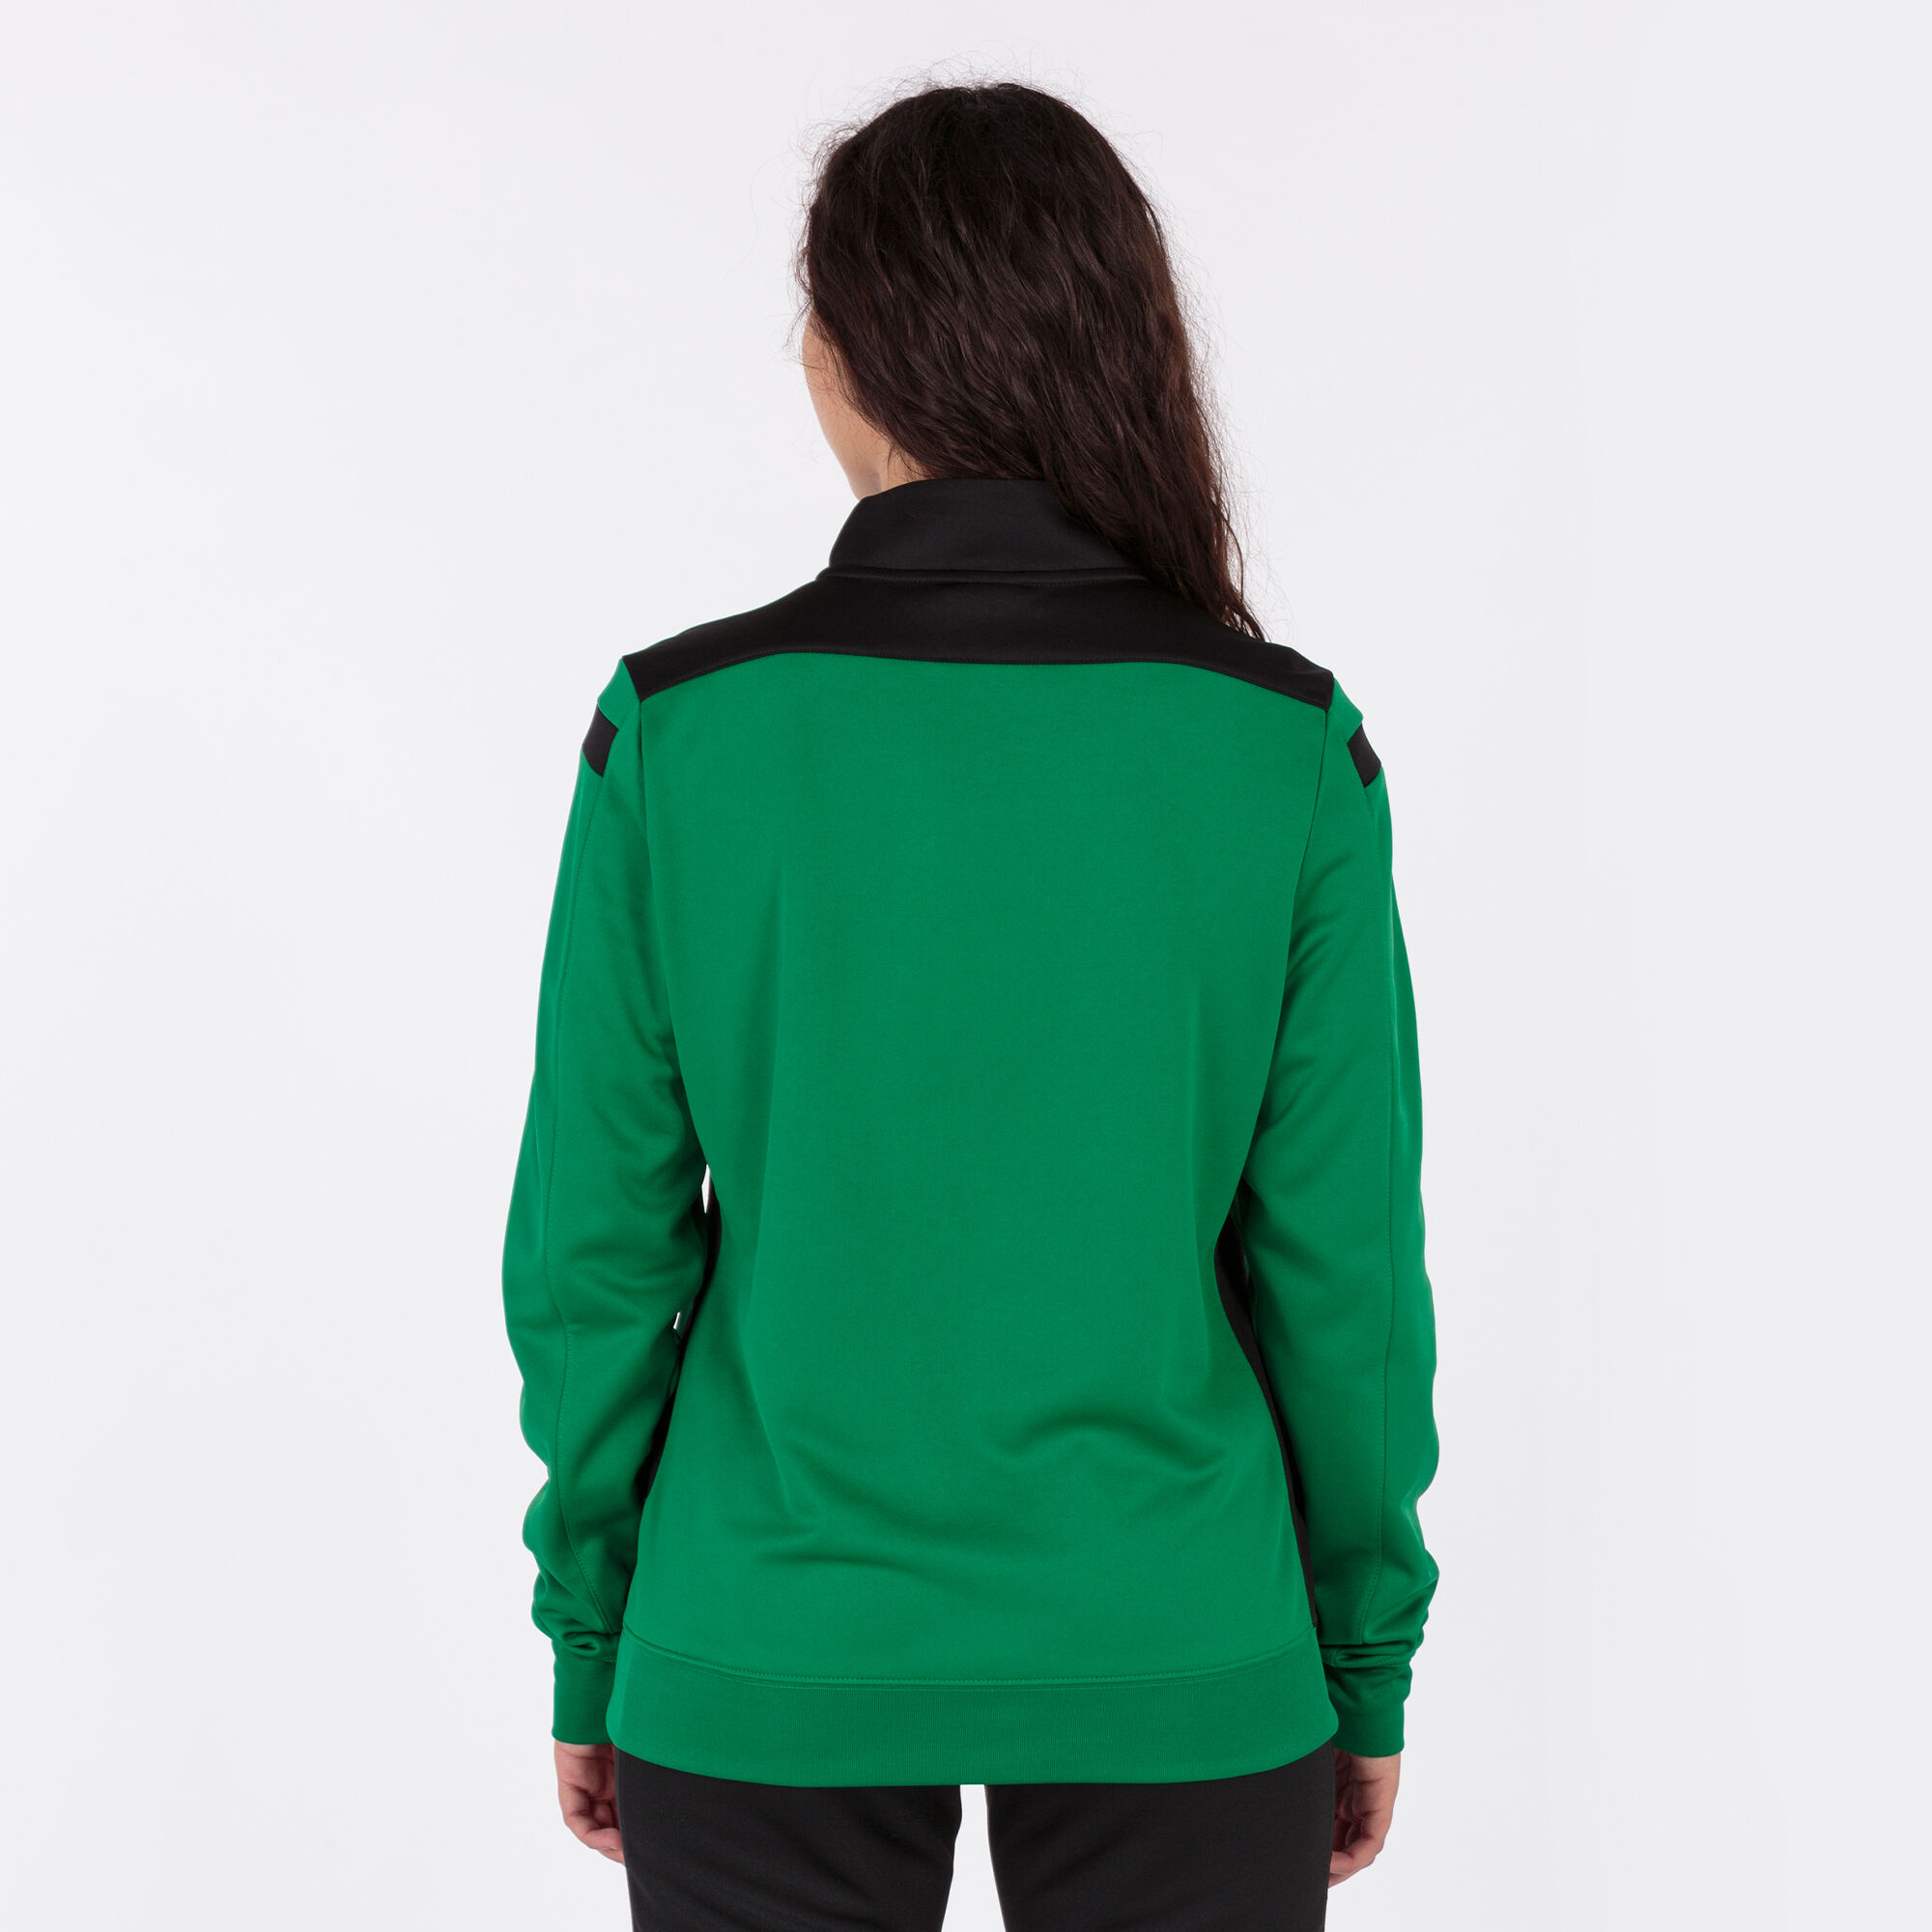 Sweatshirt woman Championship VI green black